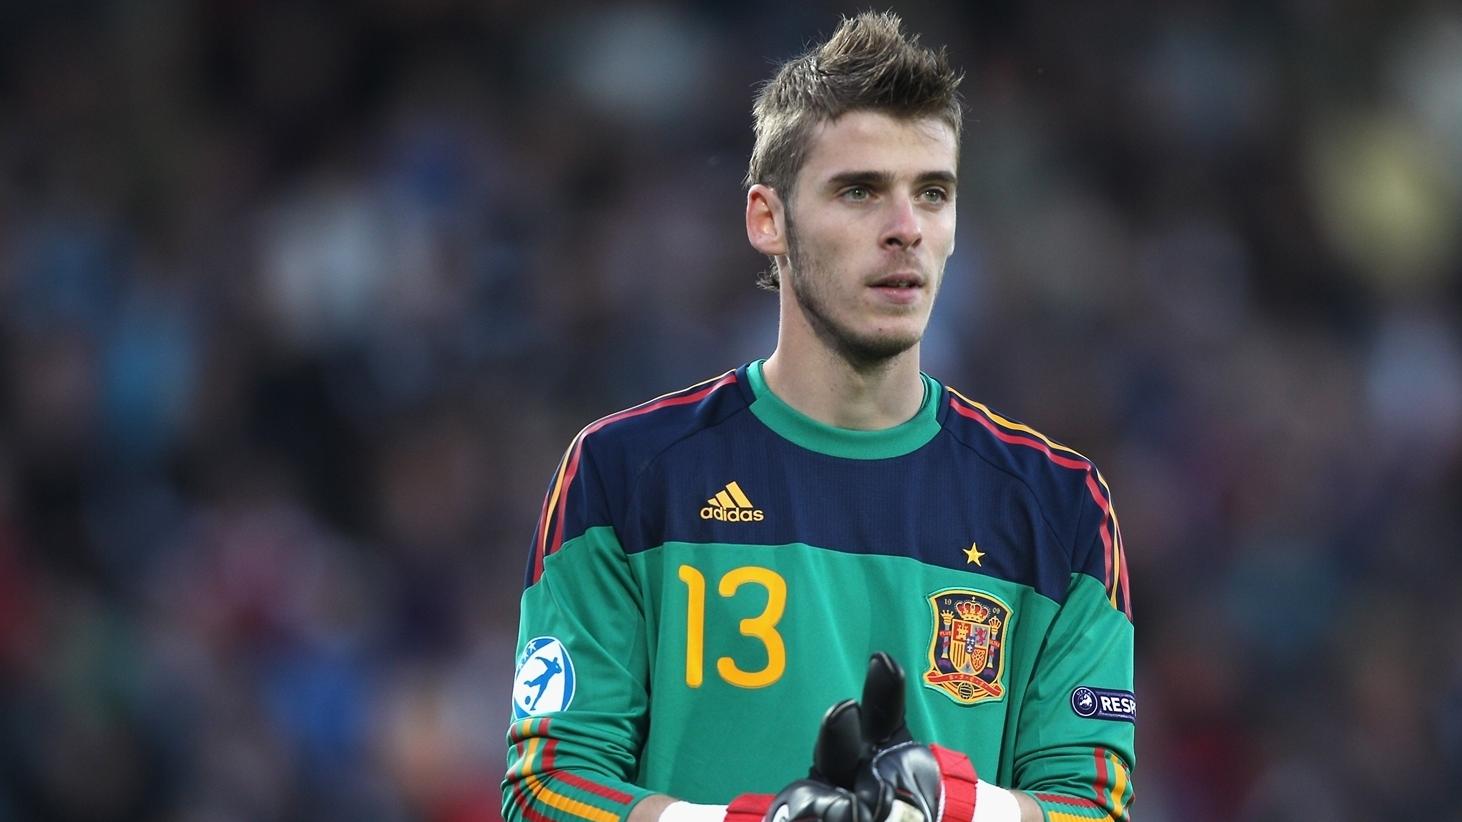 Spain's De Gea not taking Denmark lightly | Under-21 | UEFA.com